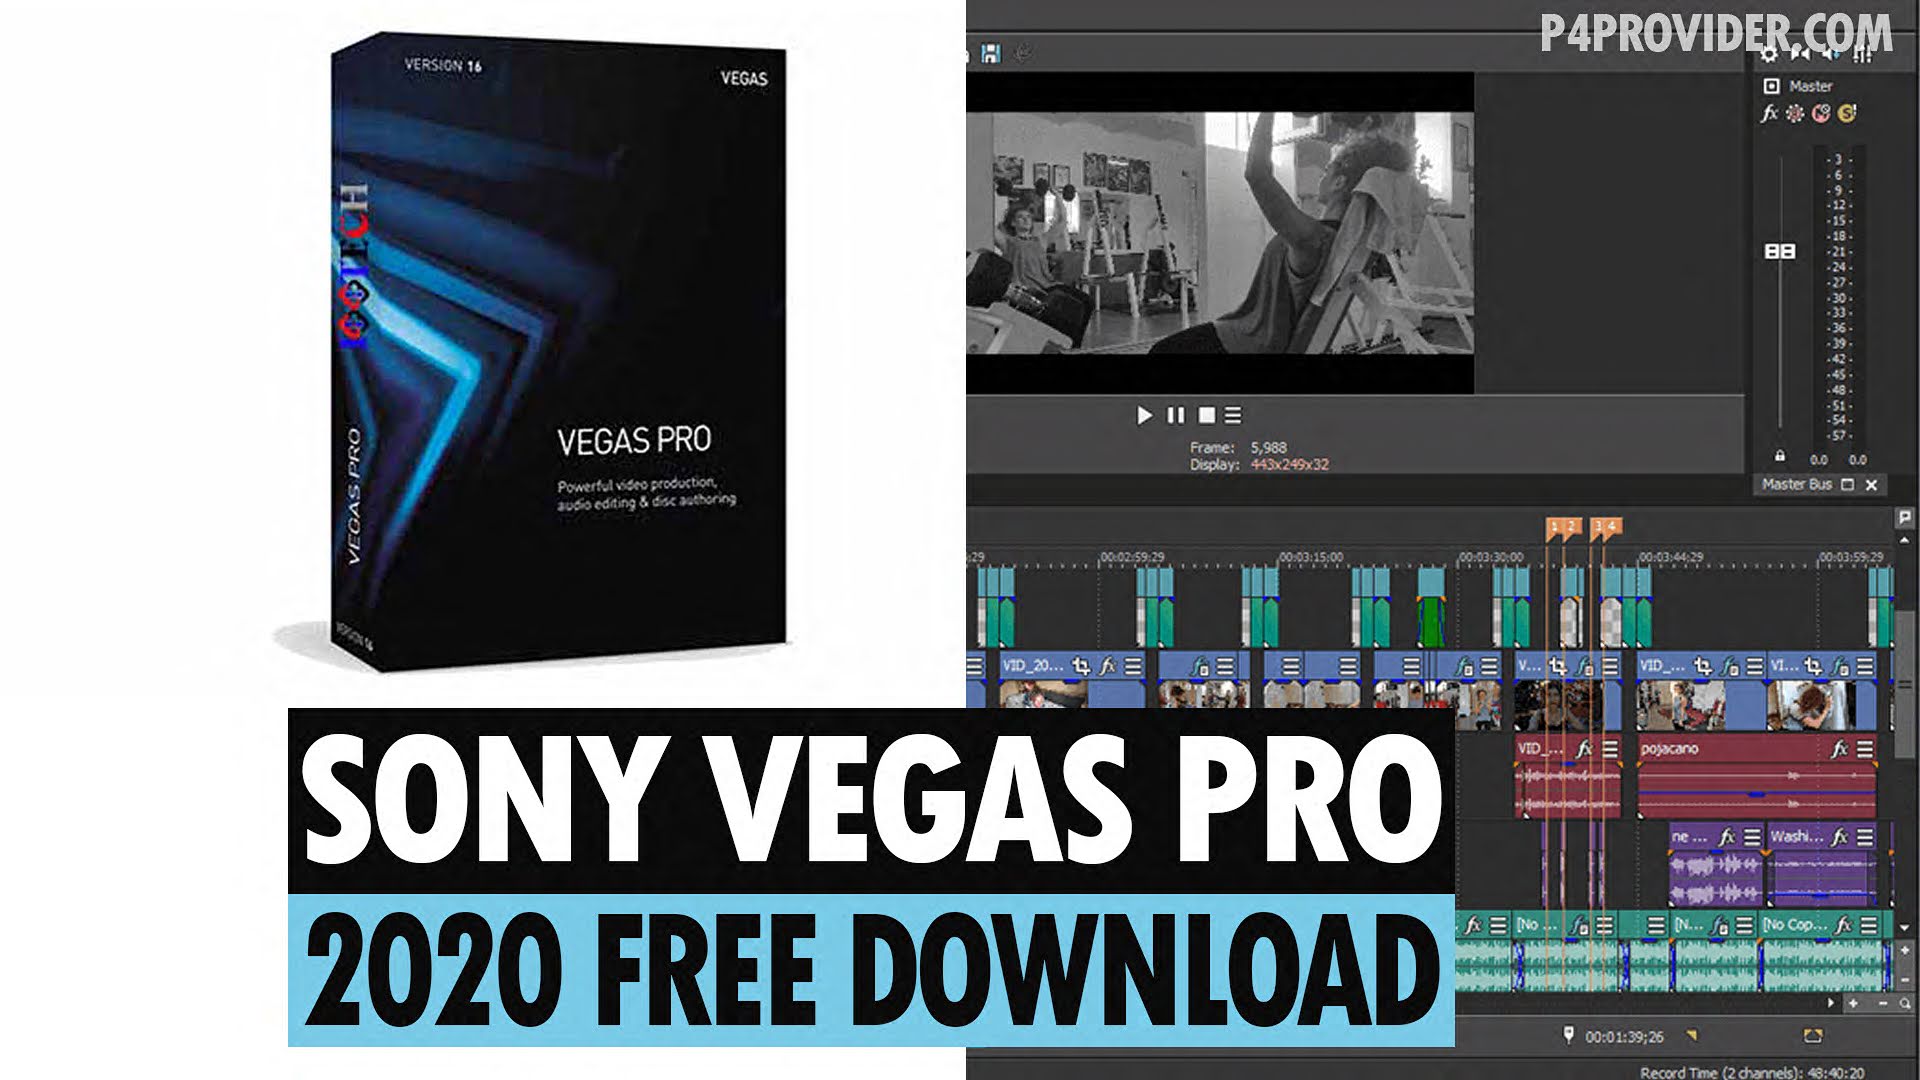 sony vegas pro free download 2020